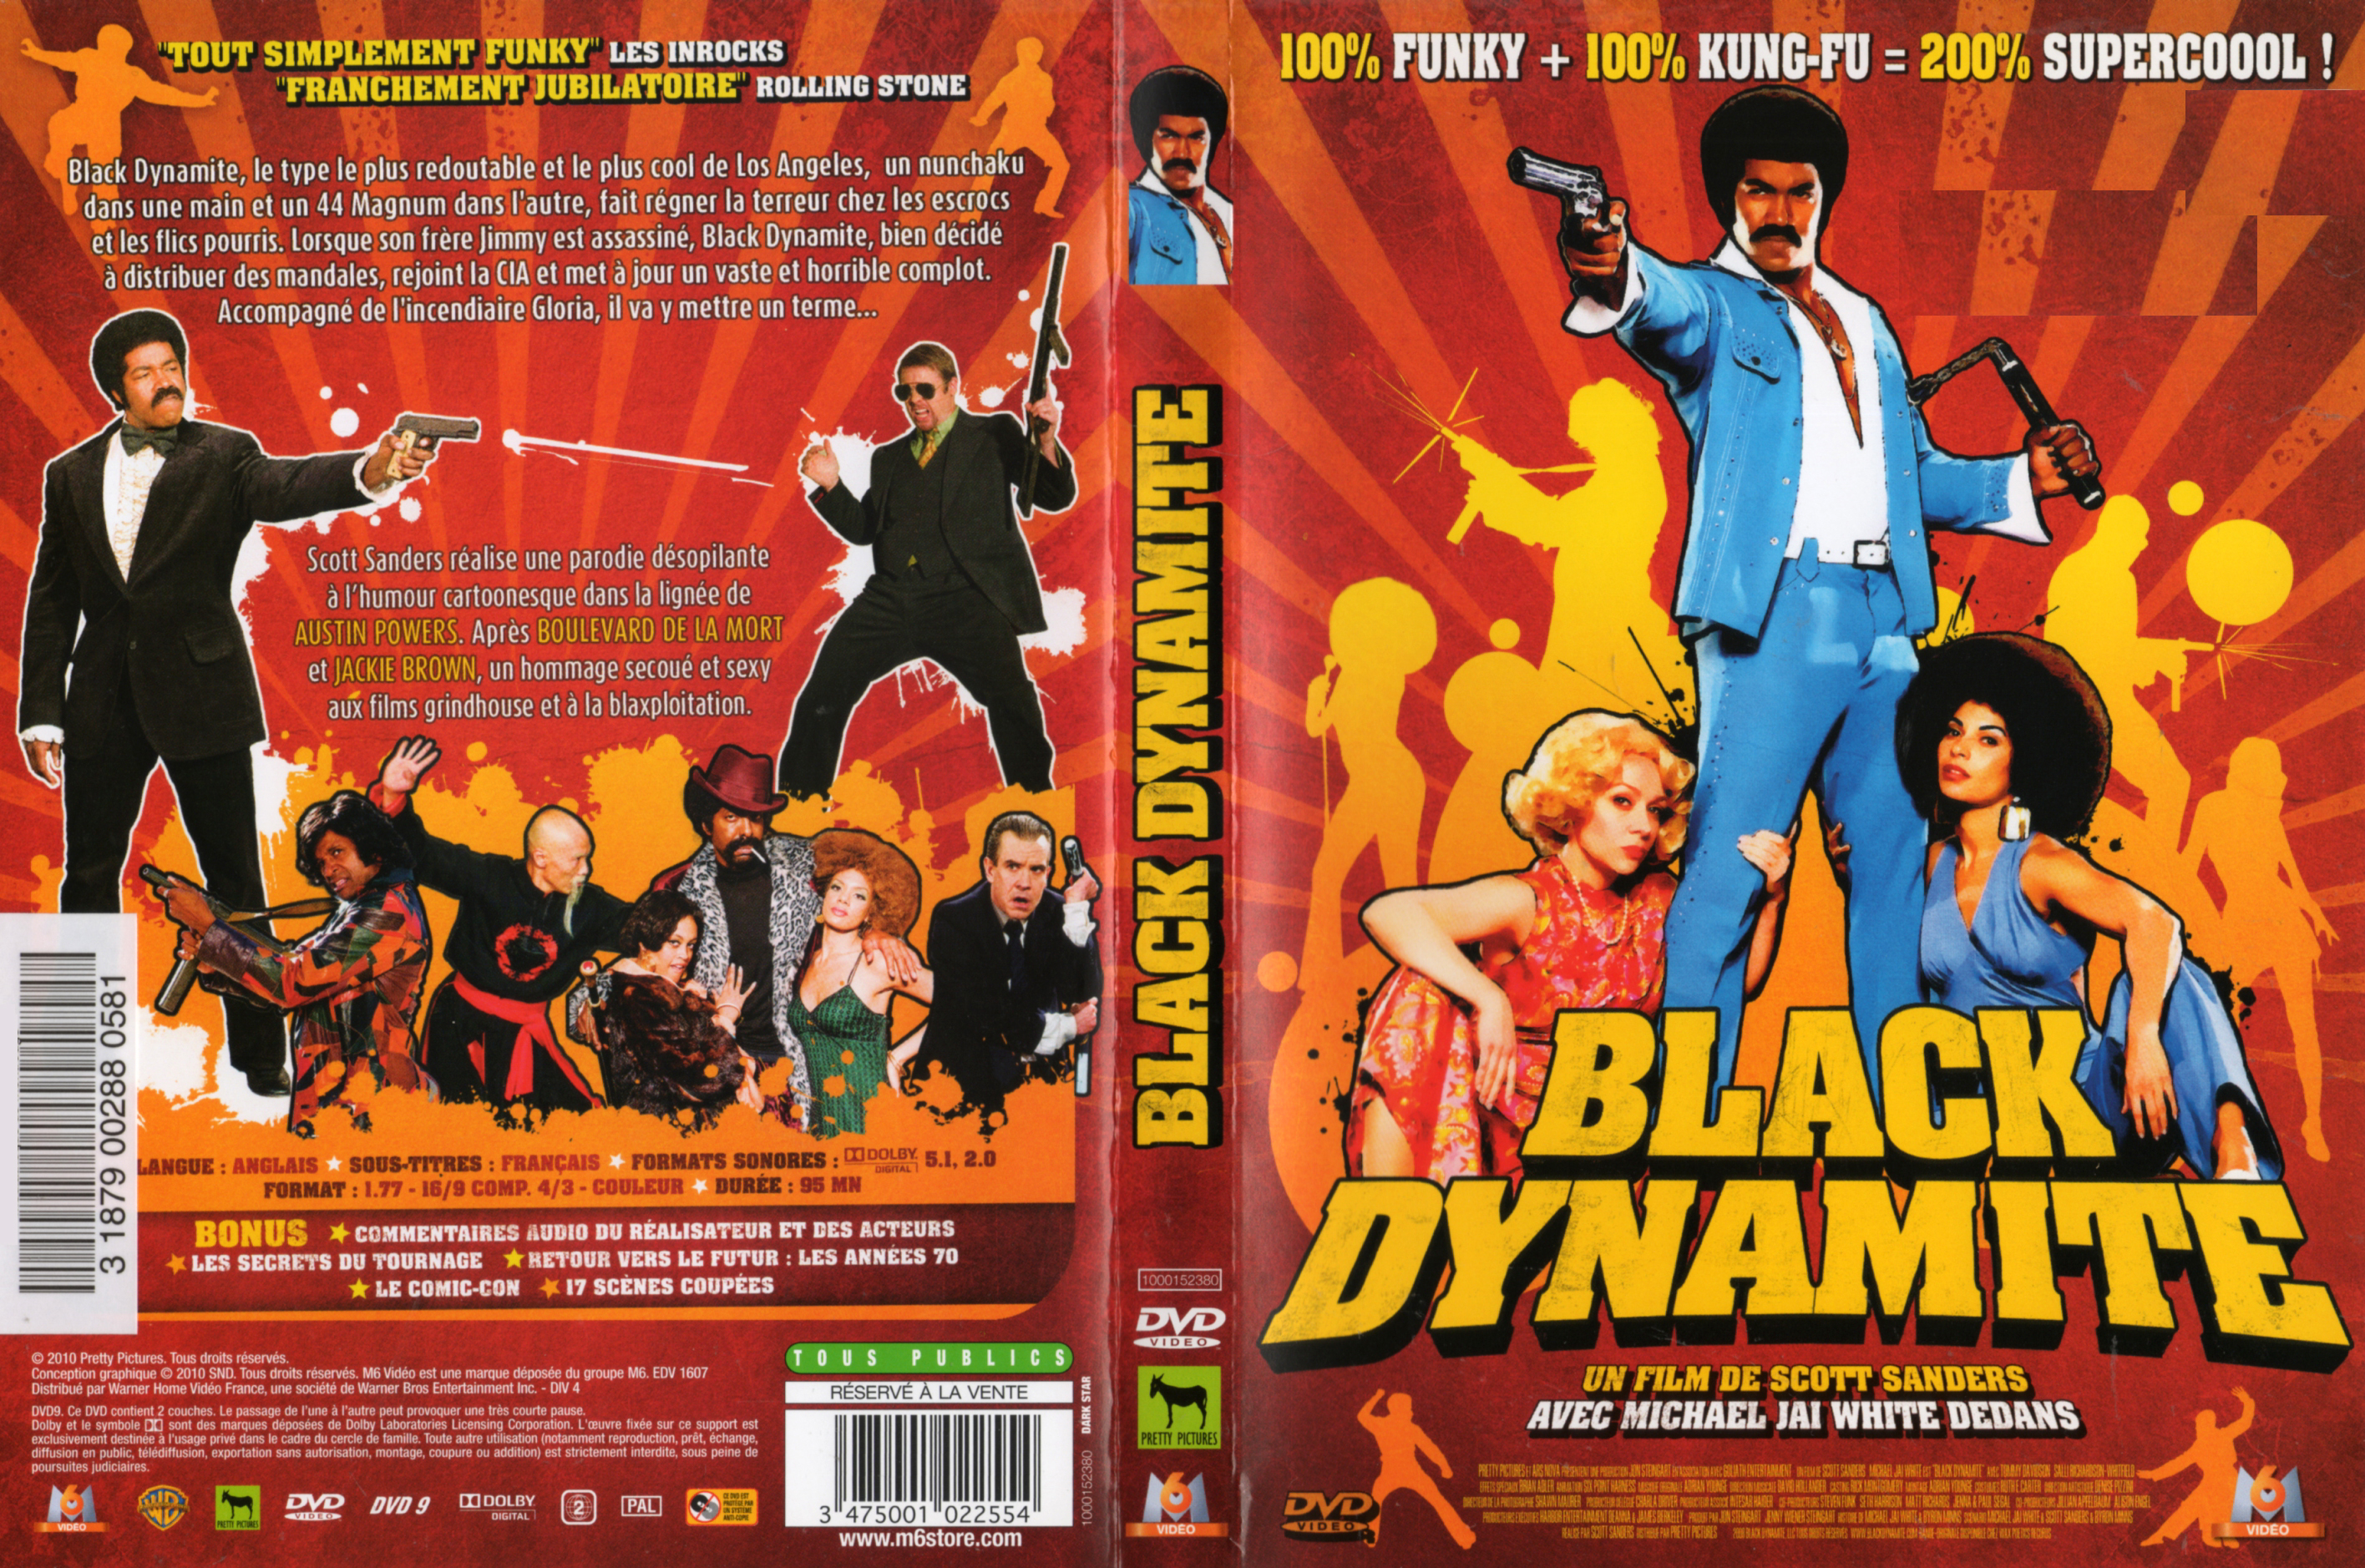 Jaquette DVD Black dynamite